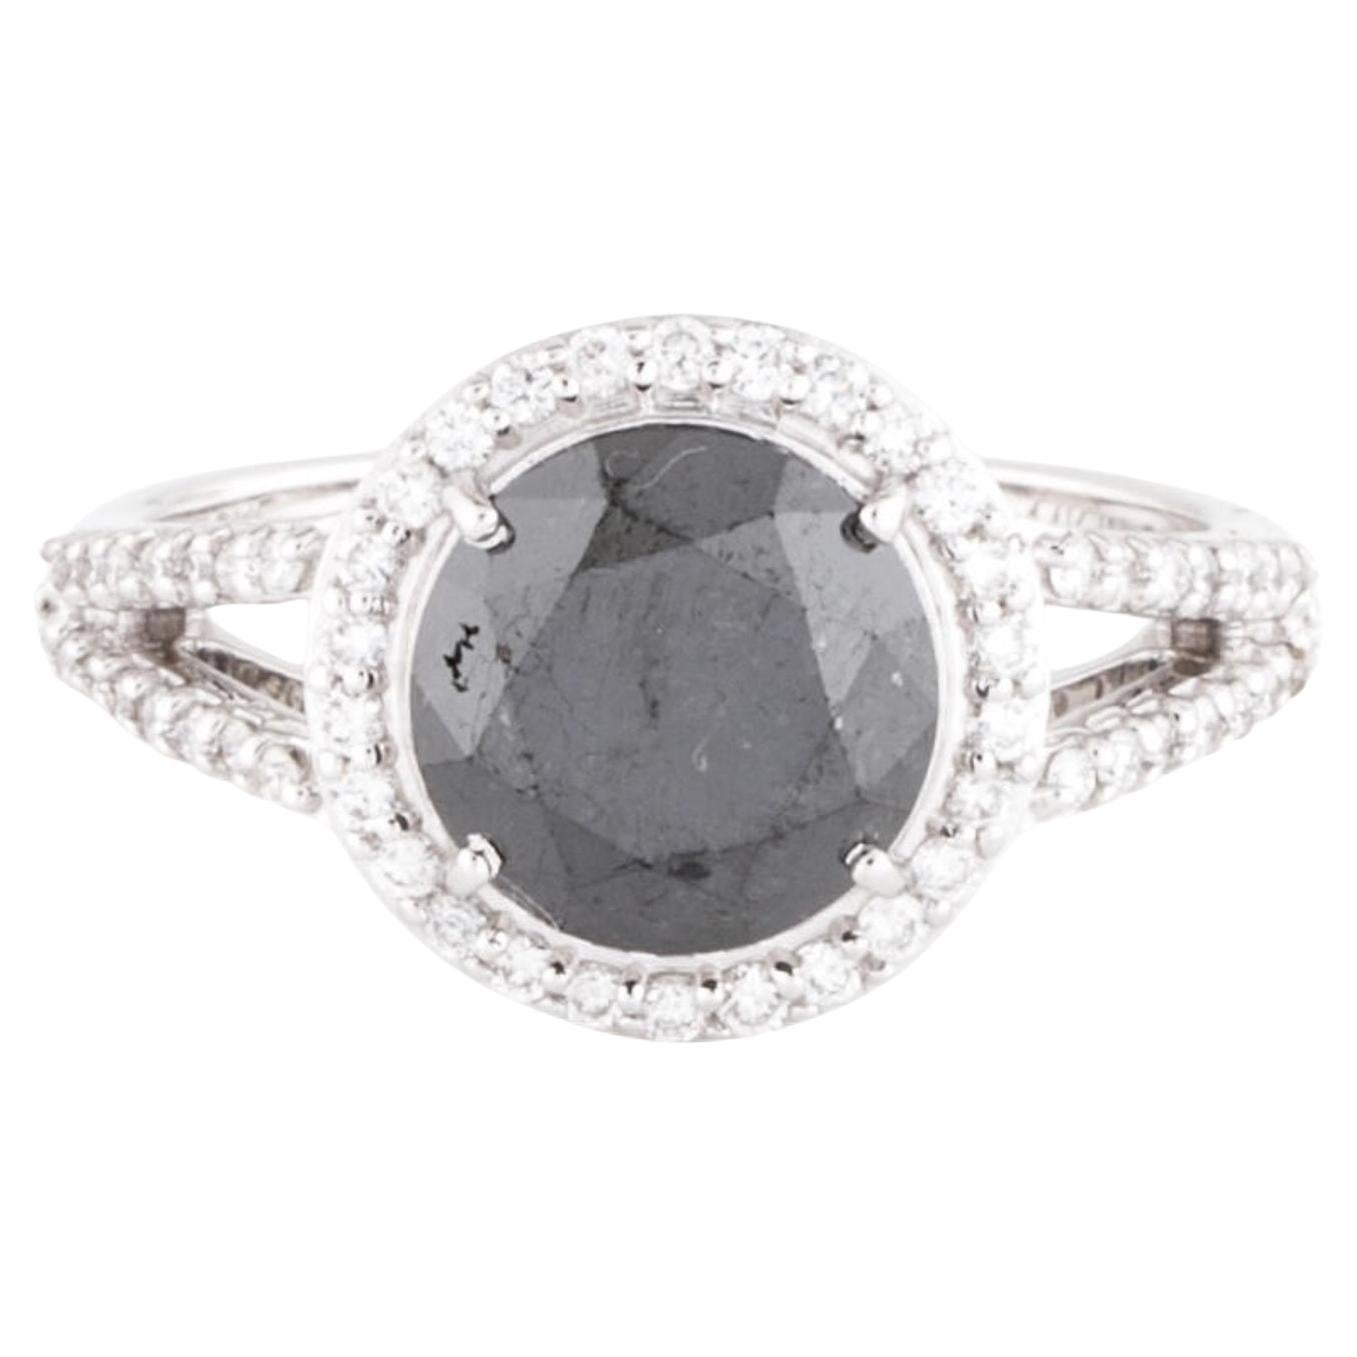 Stunning 2.63ct Diamond Engagement Ring, Size 6.75 - Elegant Statement Jewelry For Sale